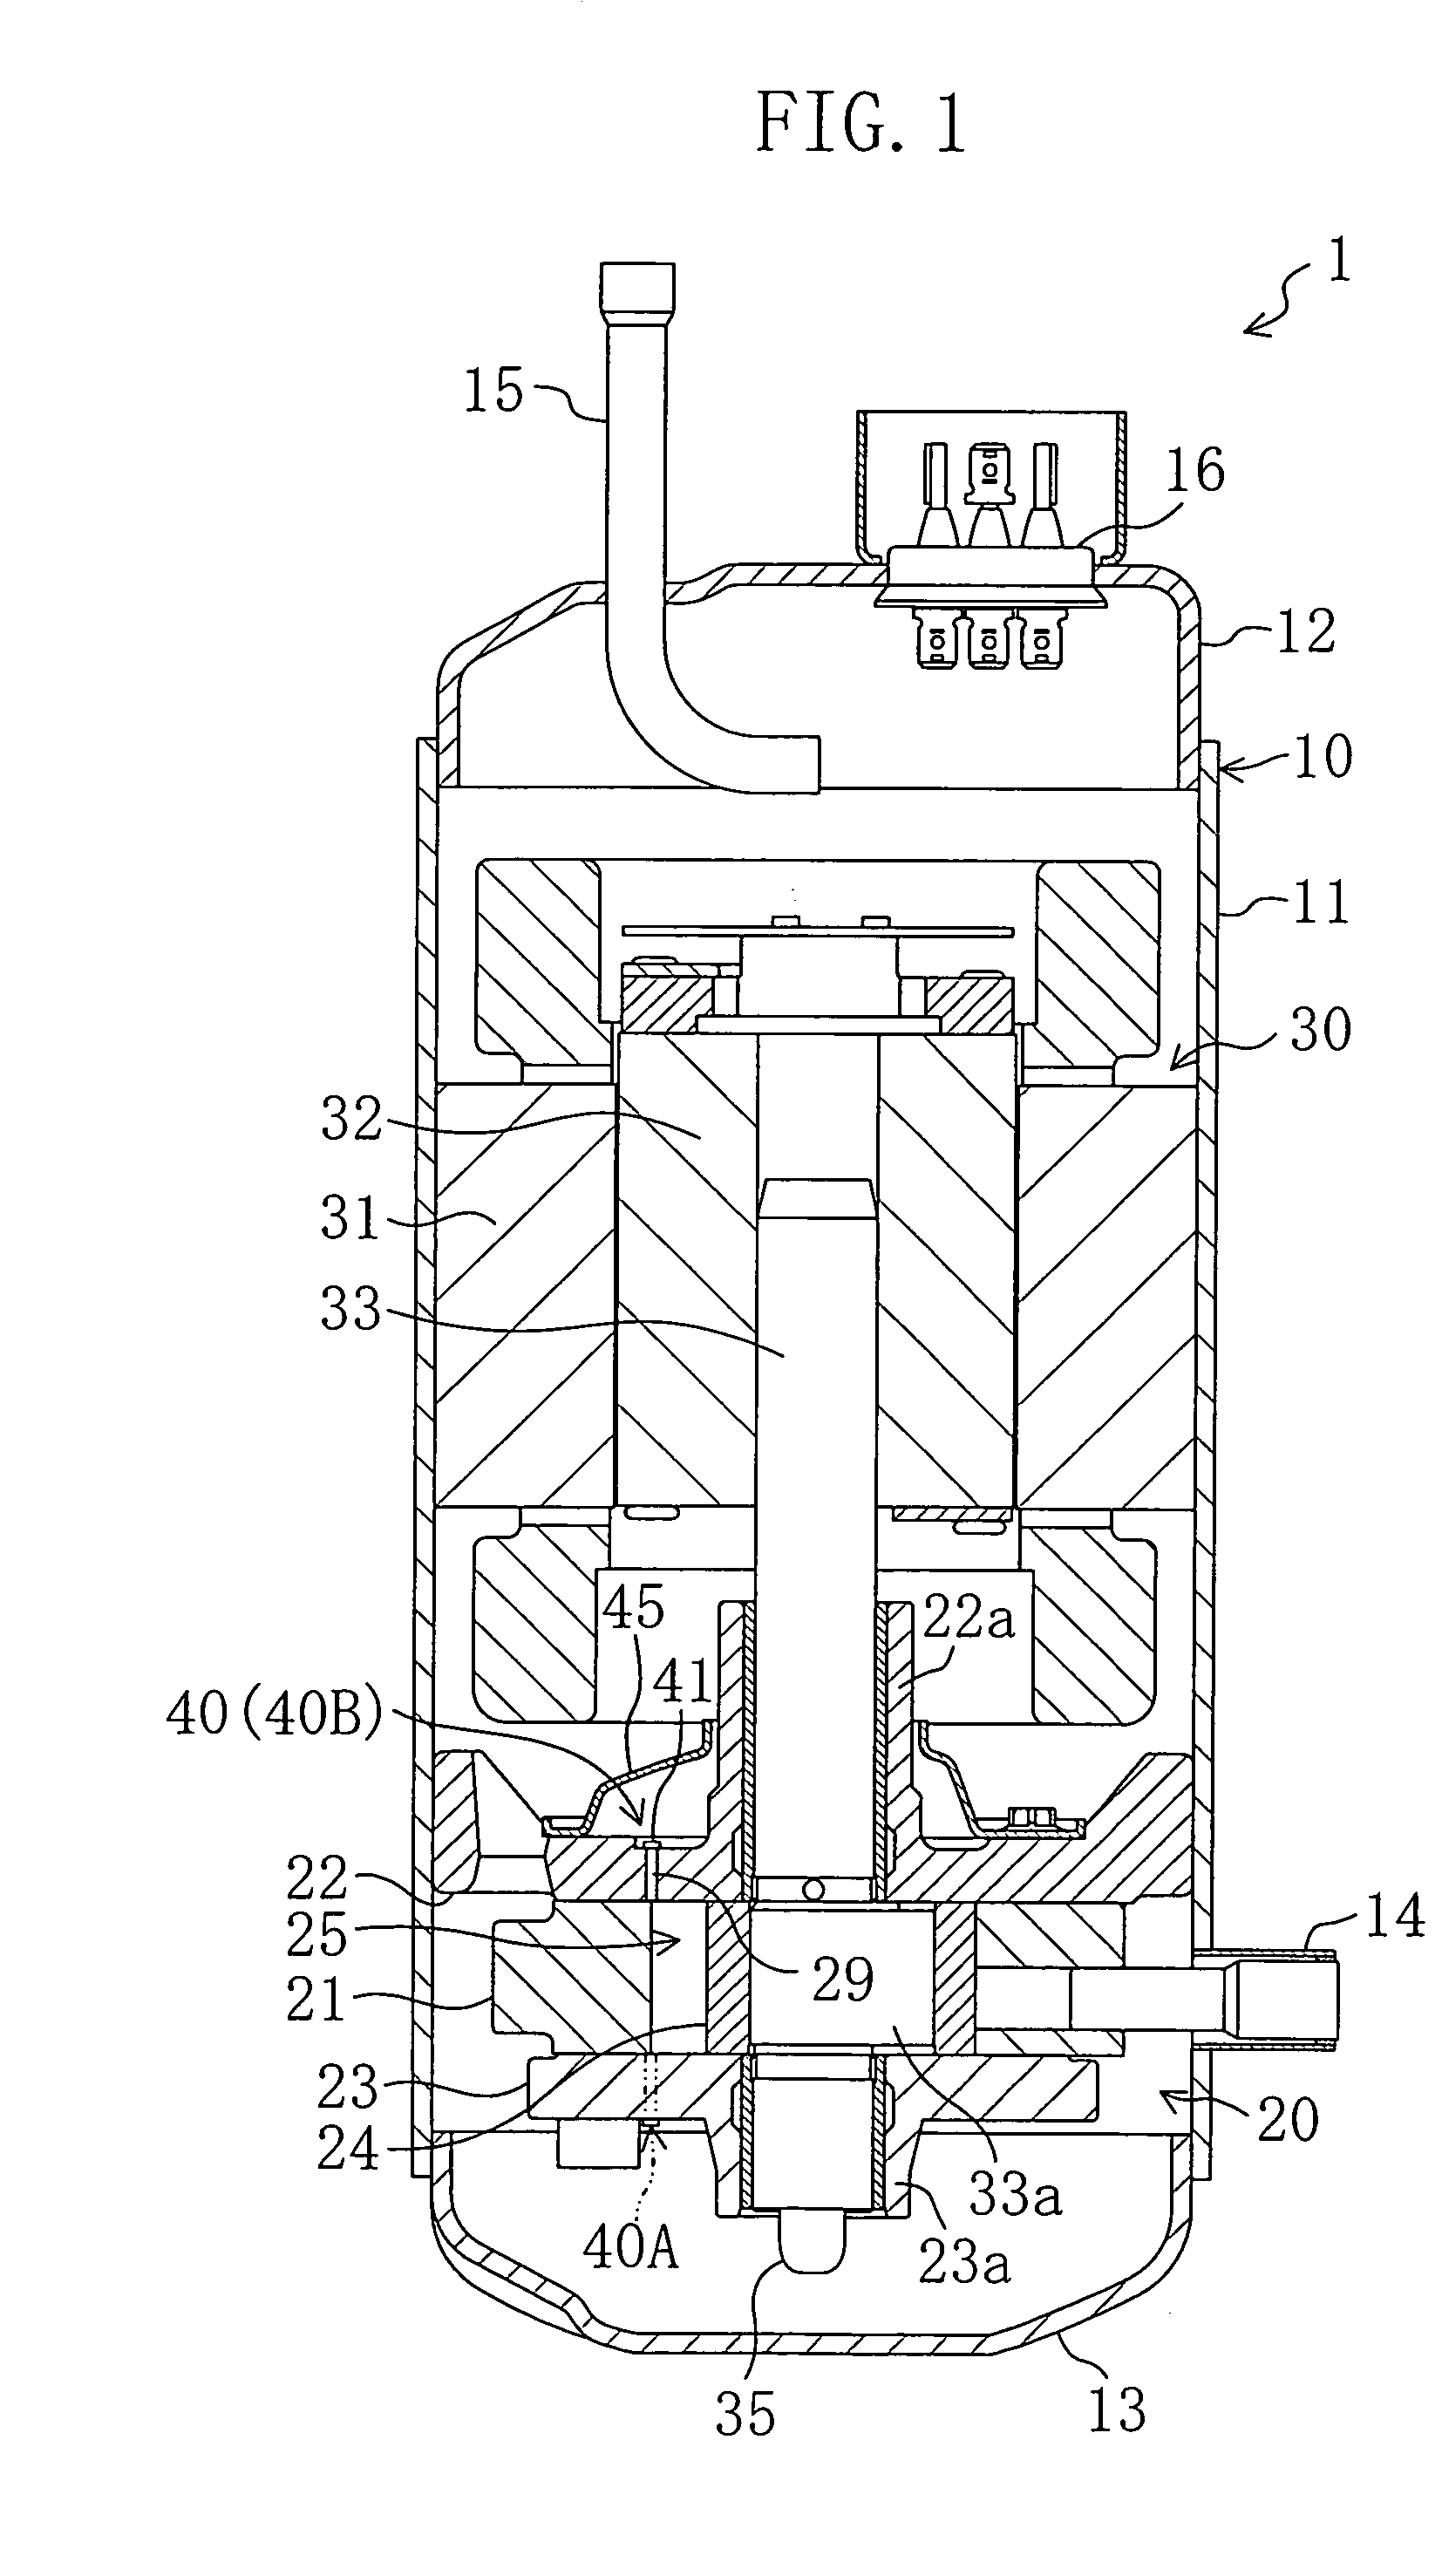 Discharge valve mechanism for variable displacement compressor